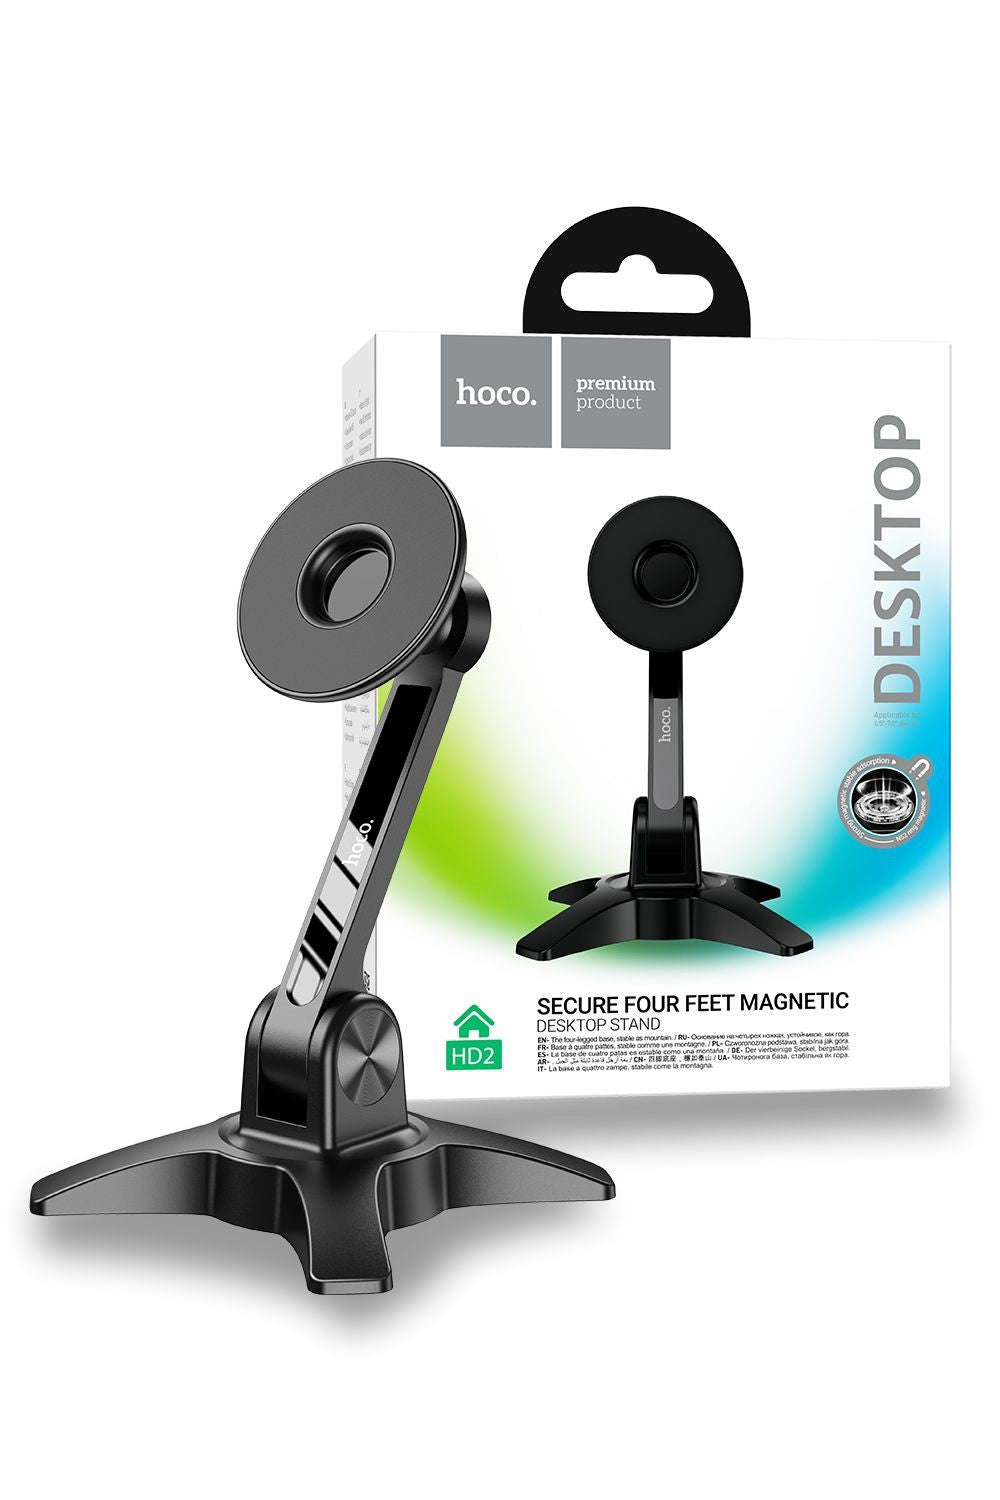 Hoco Magsafe Magnetic Holder Stand for Desk HD2